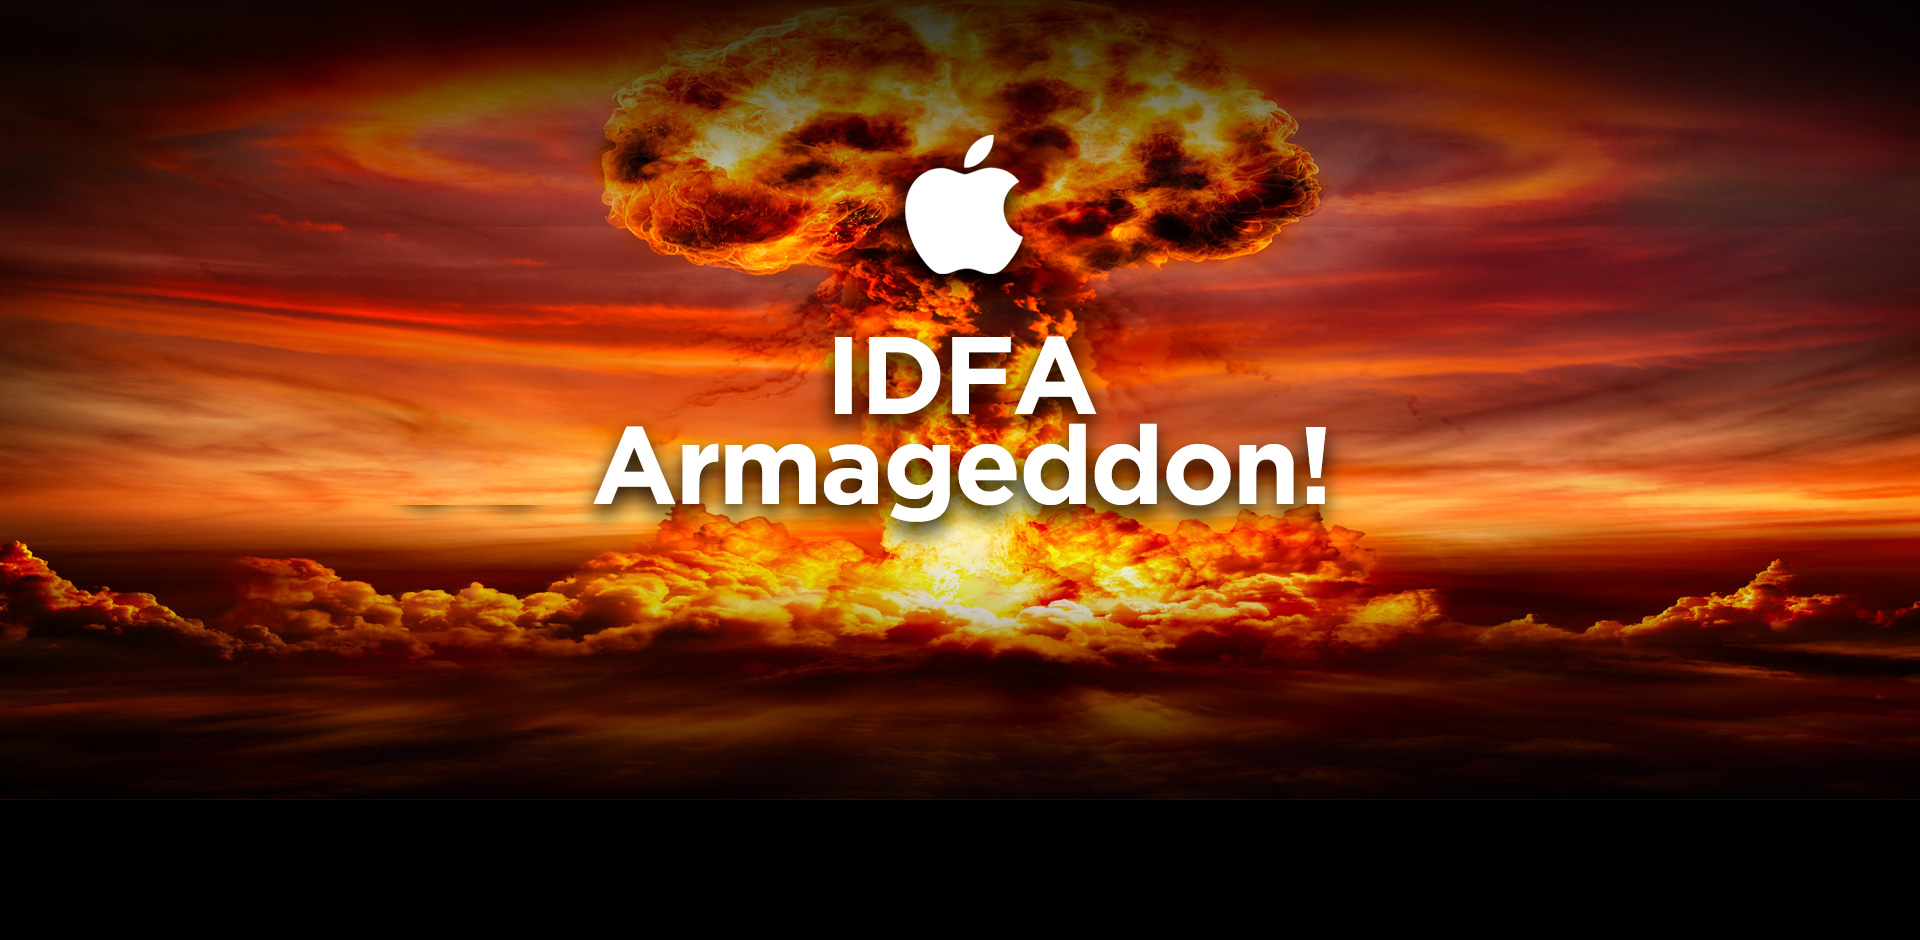 IDFA Armageddon Roundup!